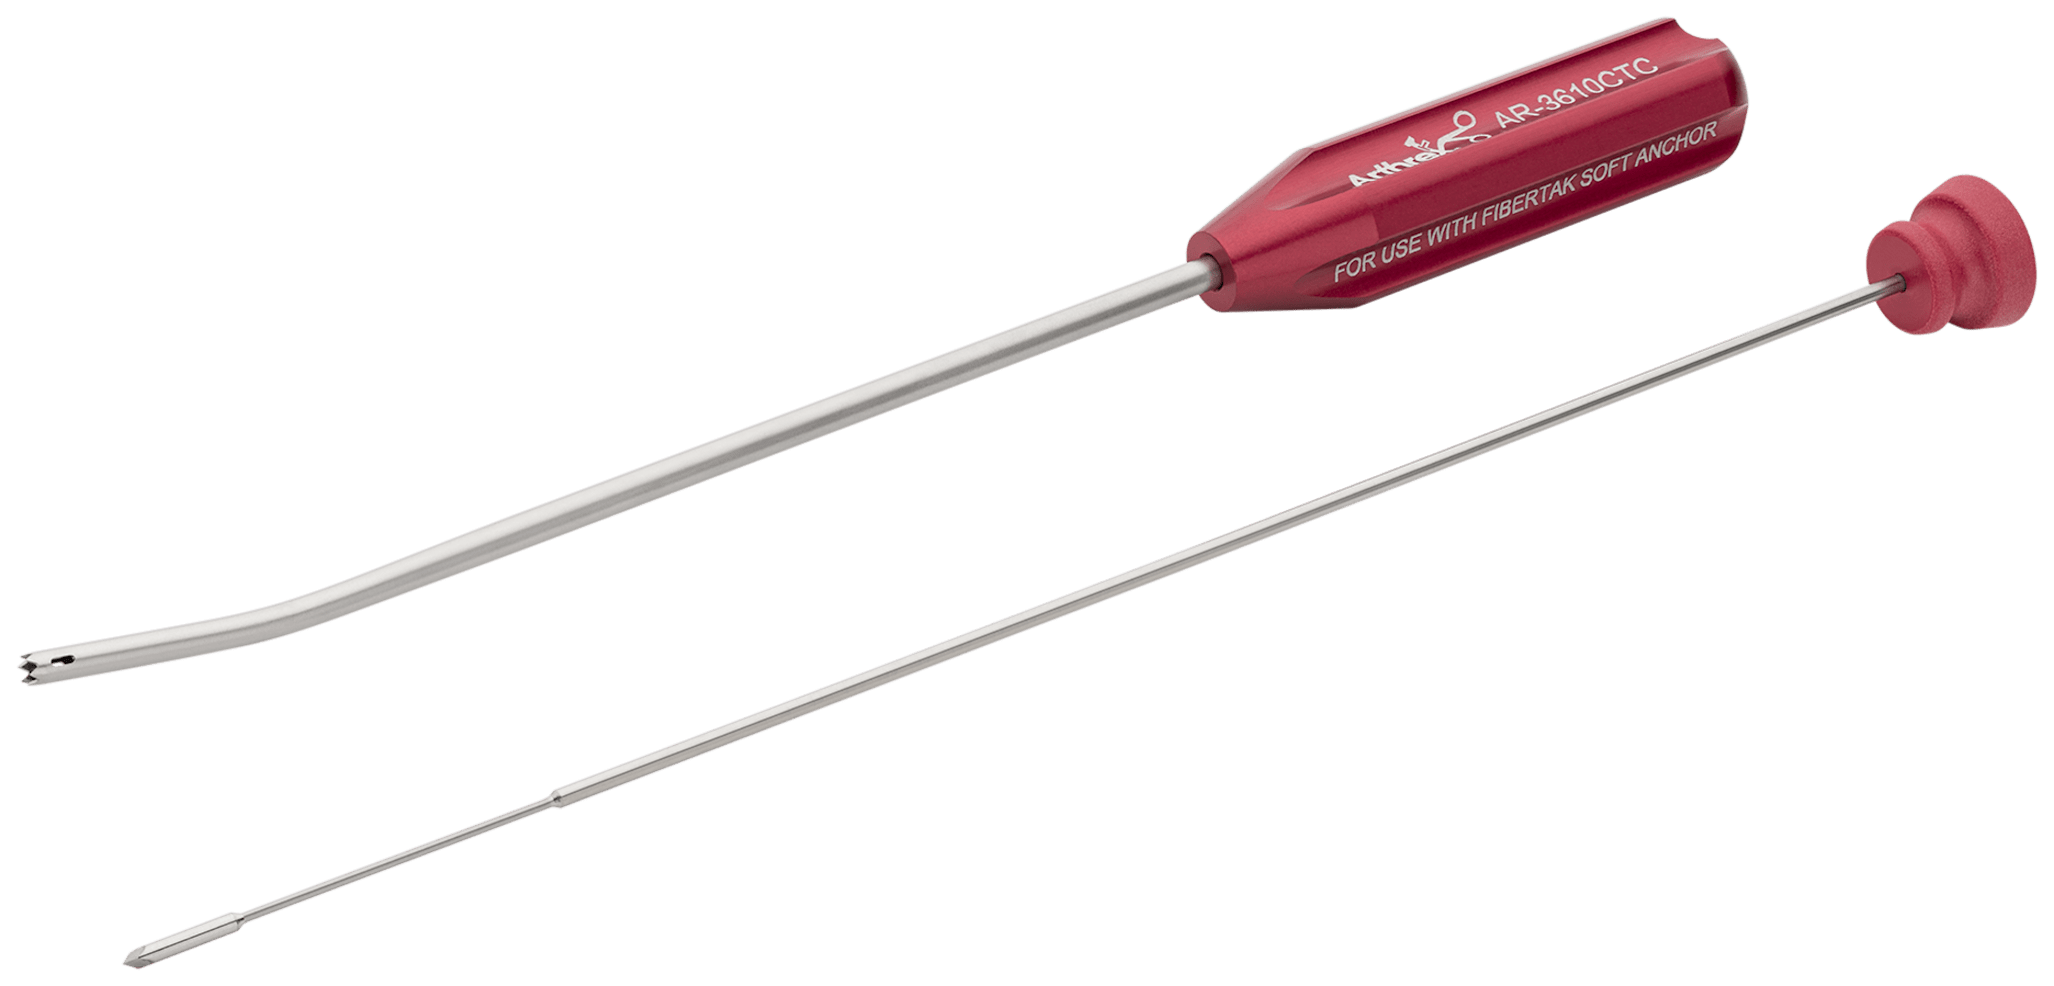 Circumferential Teeth Curved Spear w/ Flexible Sharp Obturator for FiberTak and Knotless FiberTak Anchors, Reusable